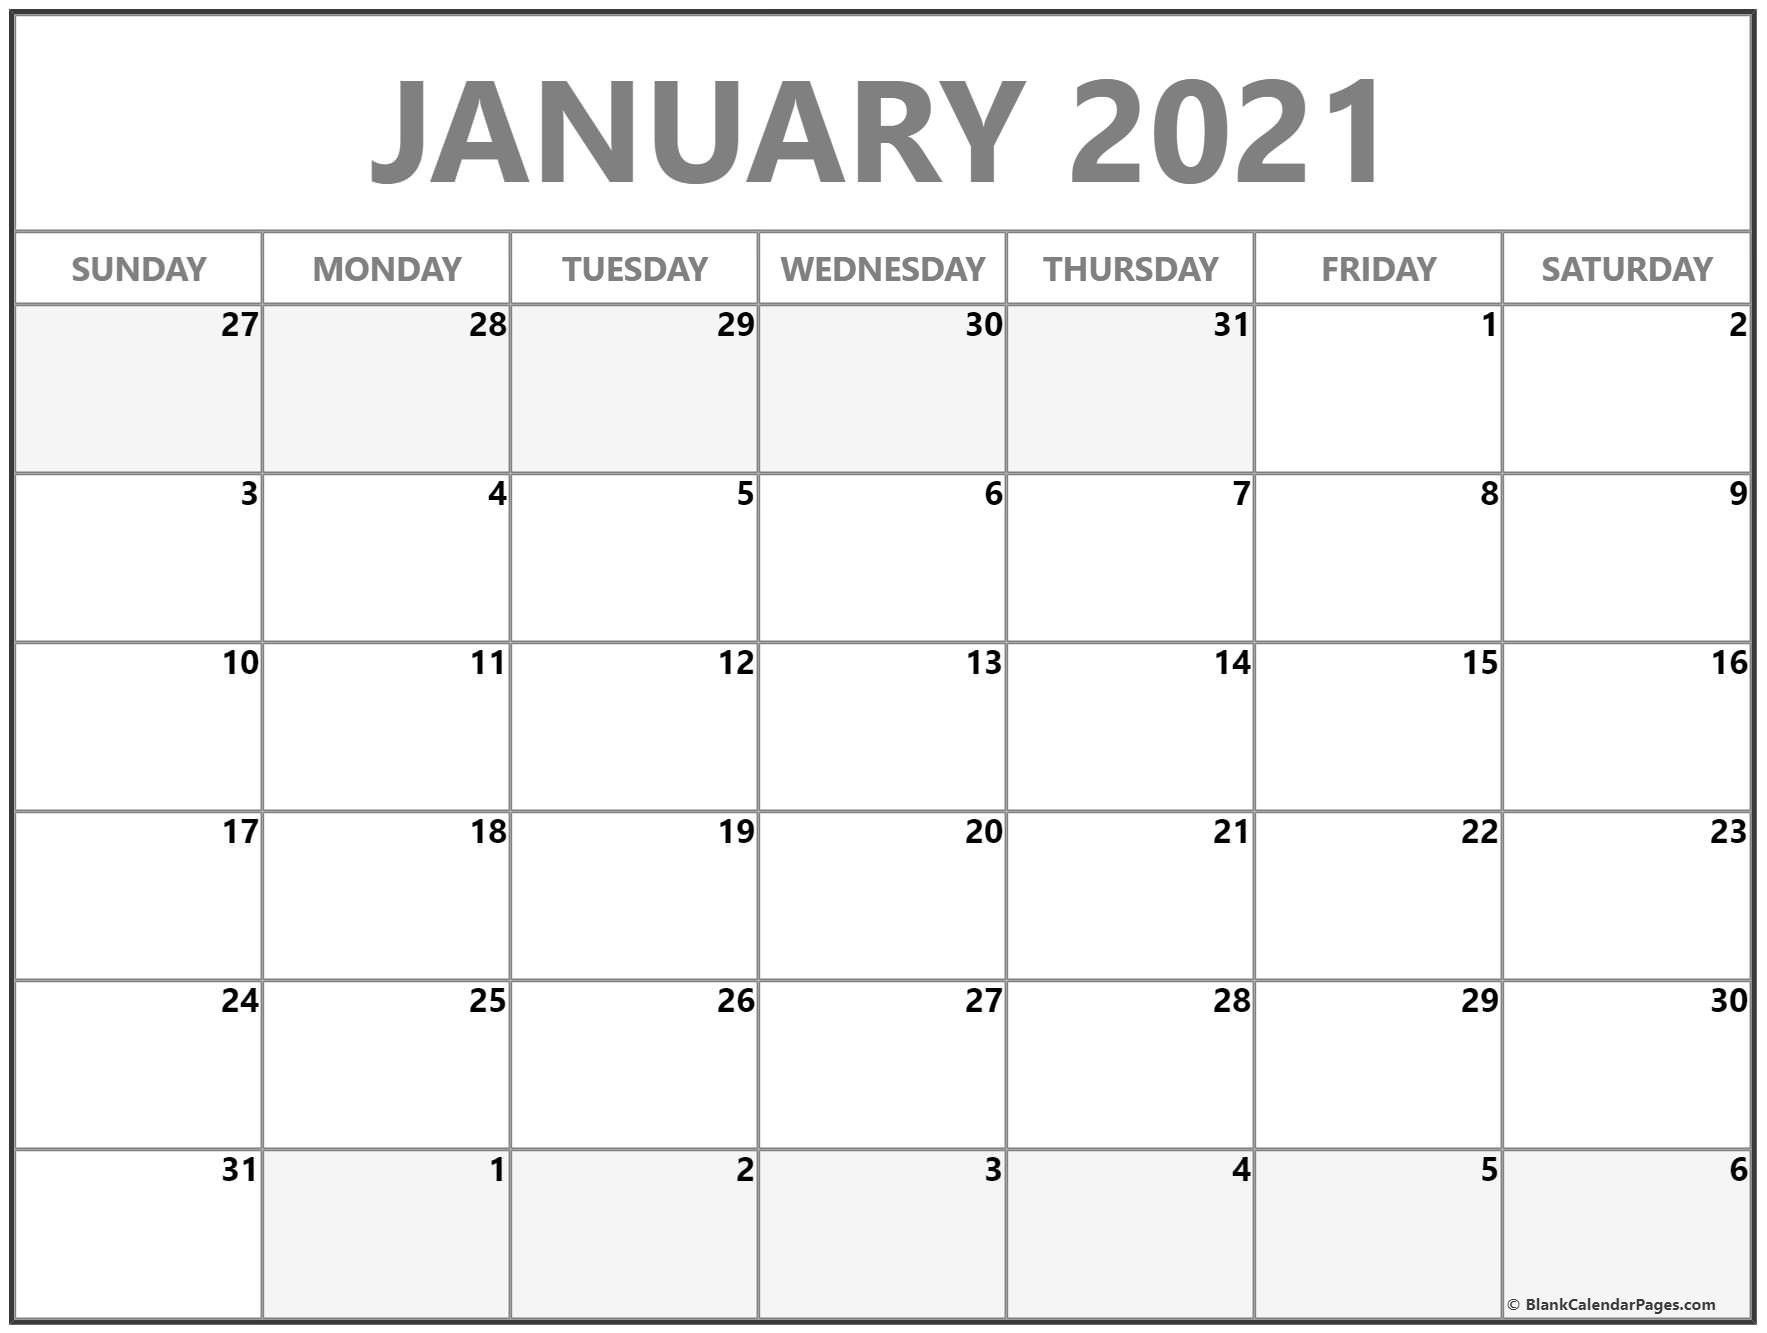 January February 2021 Calendar Template In 2020 | Printable